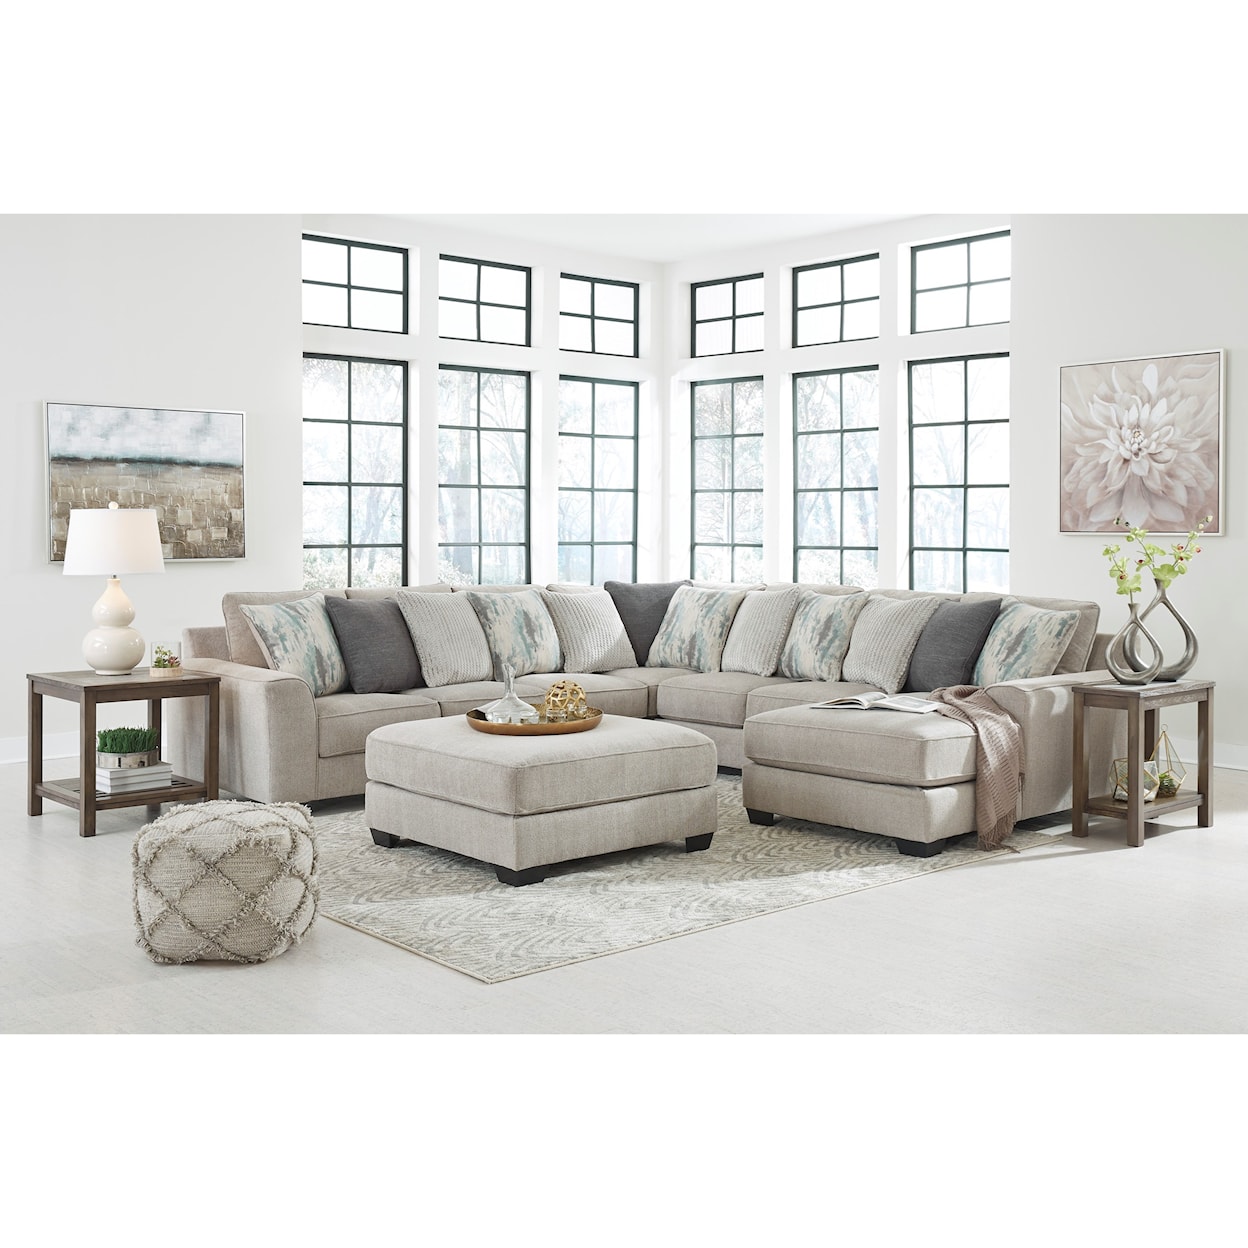 Ashley Furniture Benchcraft Ardsley Stationary Living Room Group